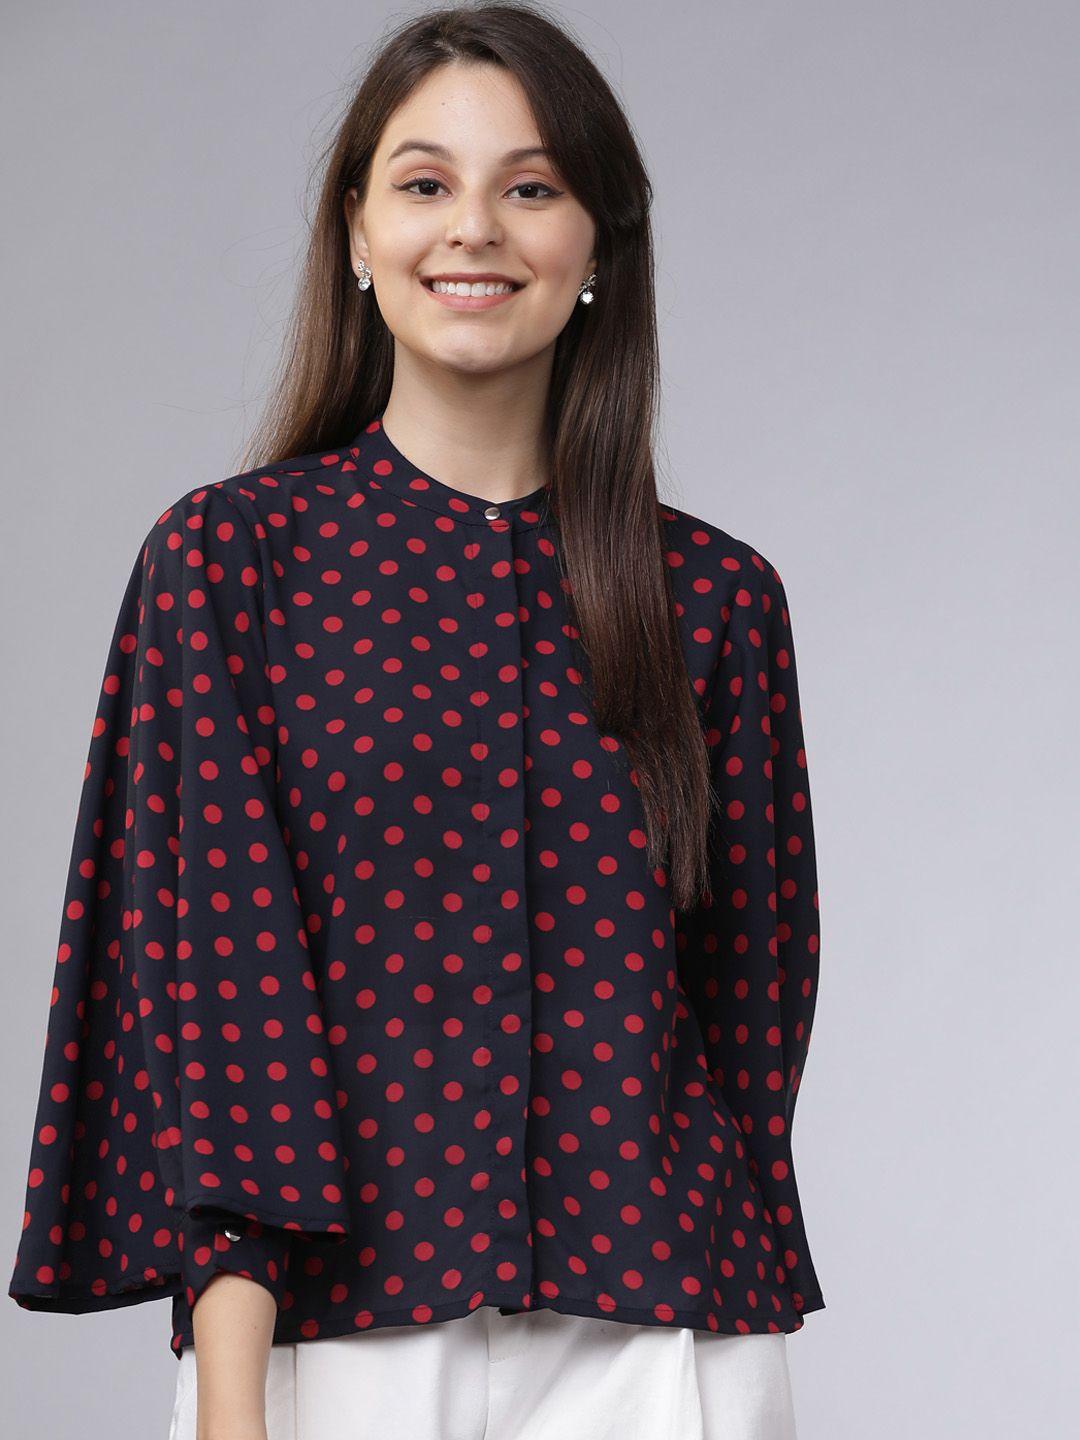 tokyo talkies women navy blue & red polka dot printed shirt style top